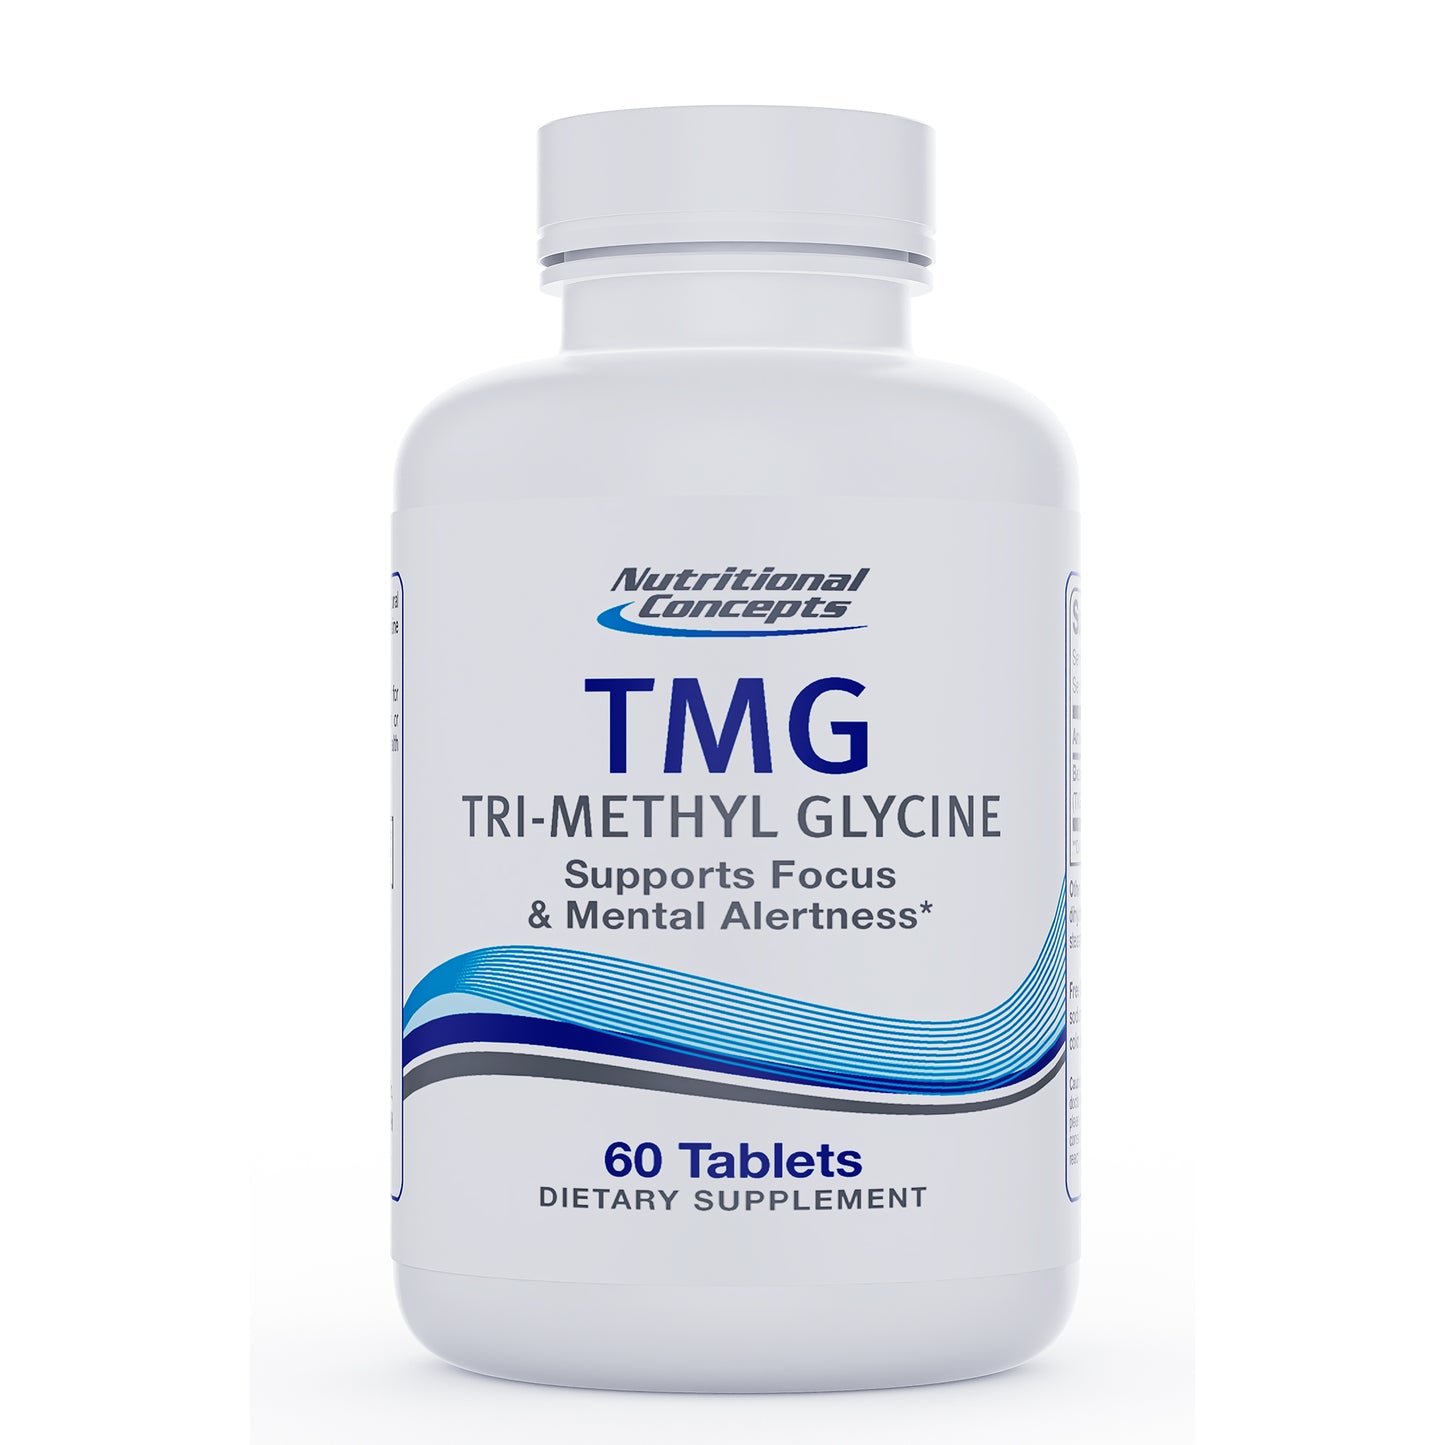 Nutritional Concepts TMG (Tri-Methyl) Glycine - 60 Tablets